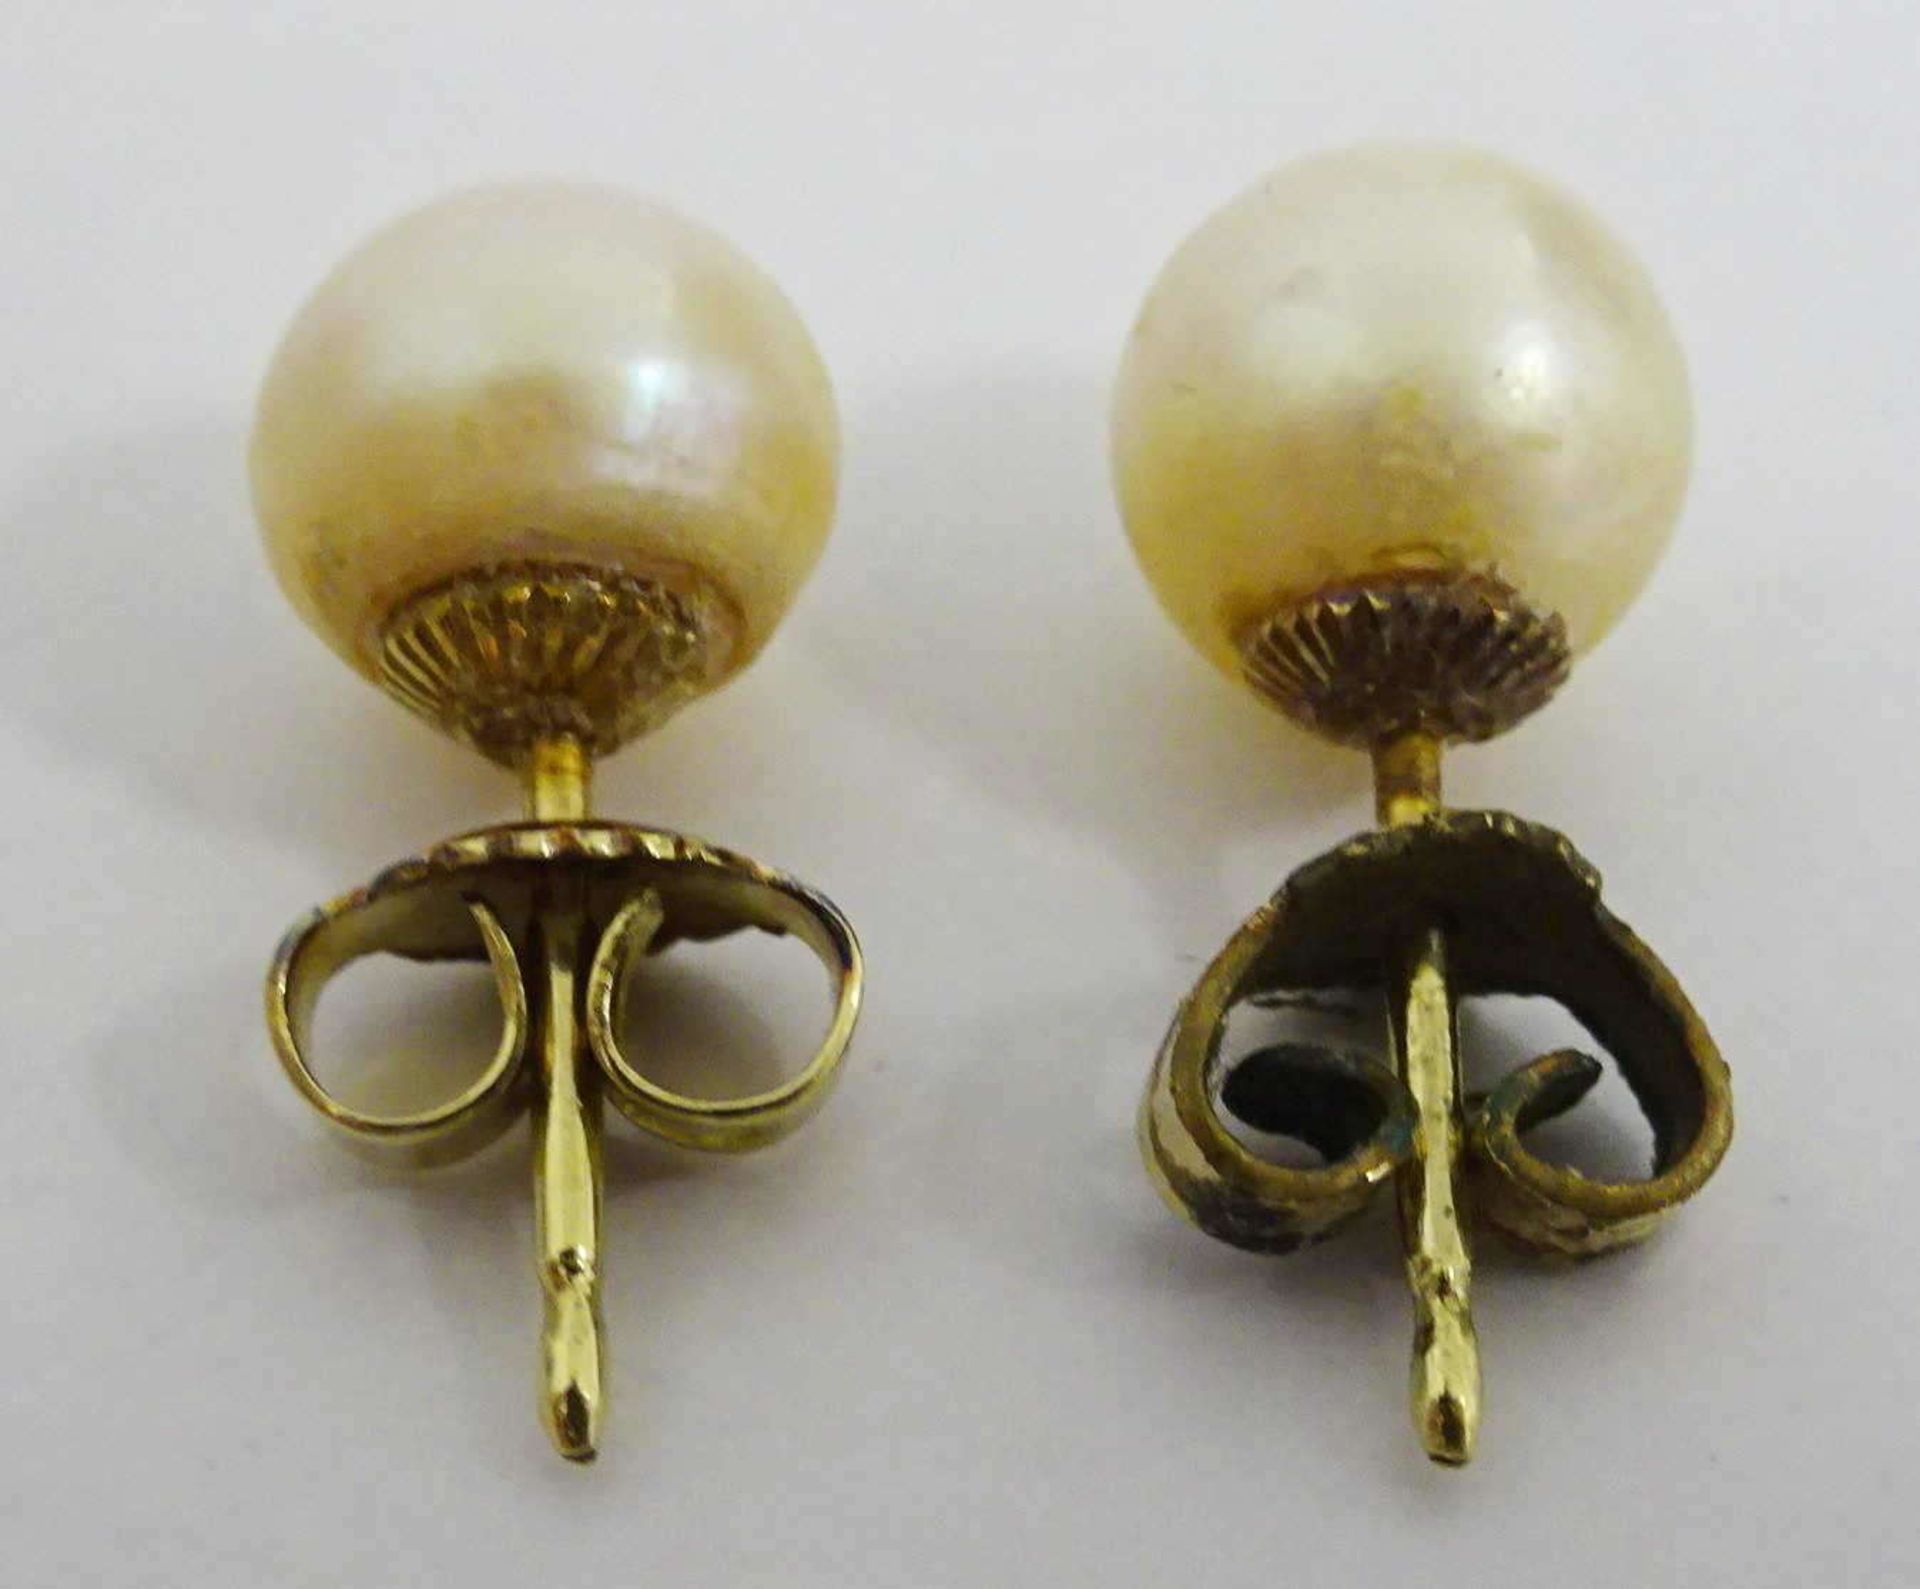 1 Paar Perlohrringe in 585er Gelbgold Fassung.1 pair of pearl earrings in 585 yellow gold setting. - Bild 2 aus 2